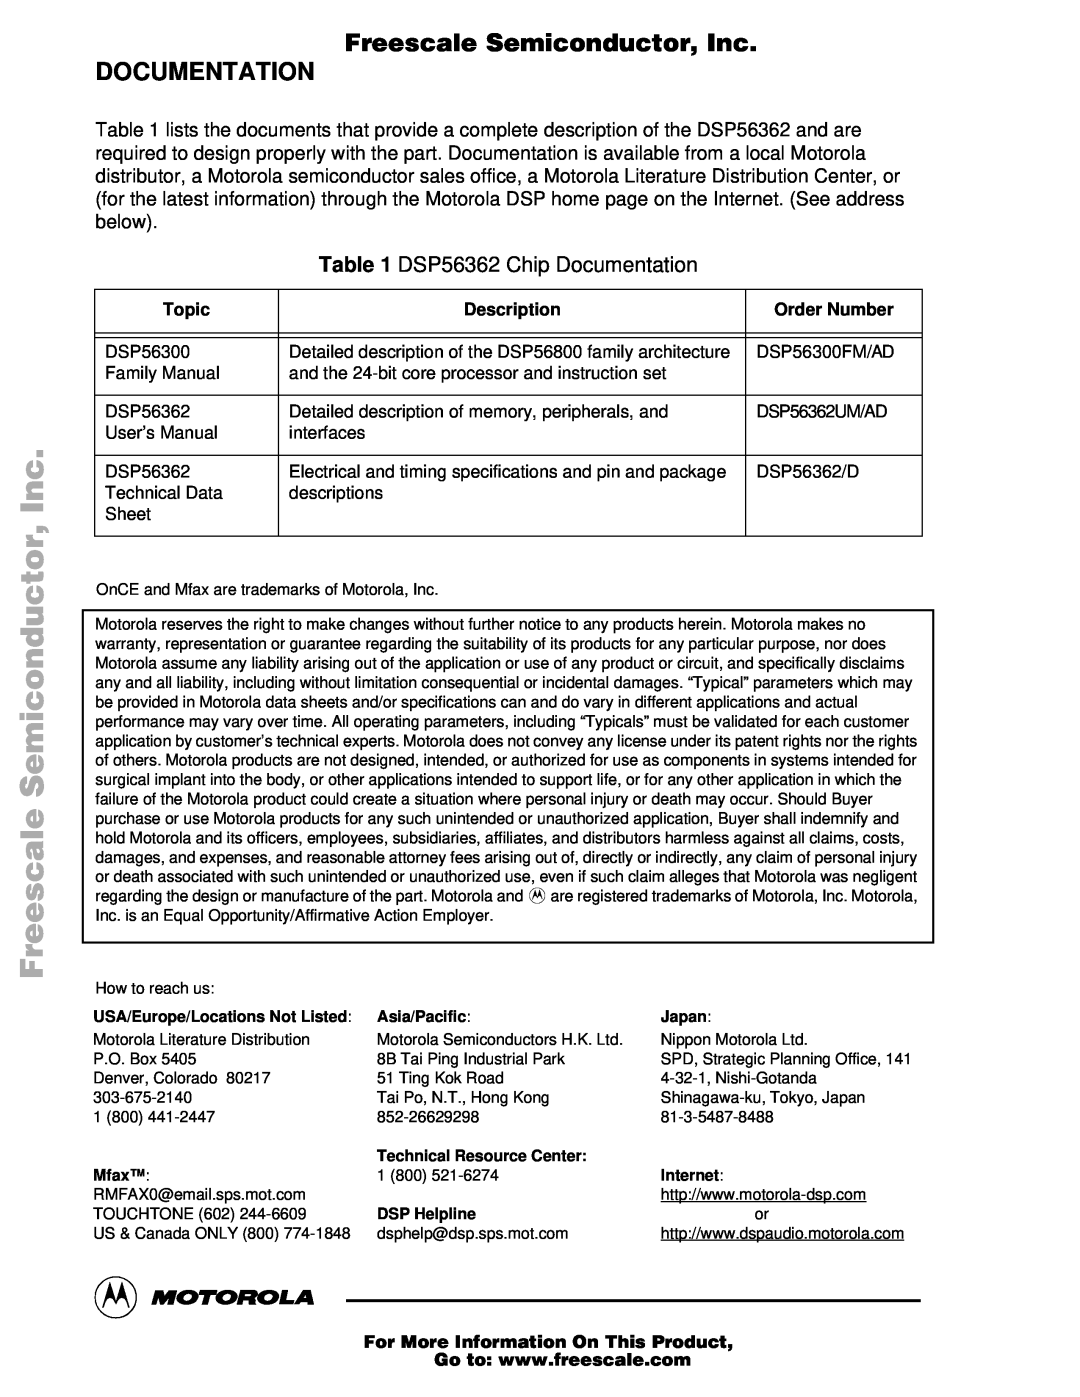 Motorola Freescale Semiconductor, Inc DOCUMENTATION, DSP56362 Chip Documentation, Topic, Description, Order Number 